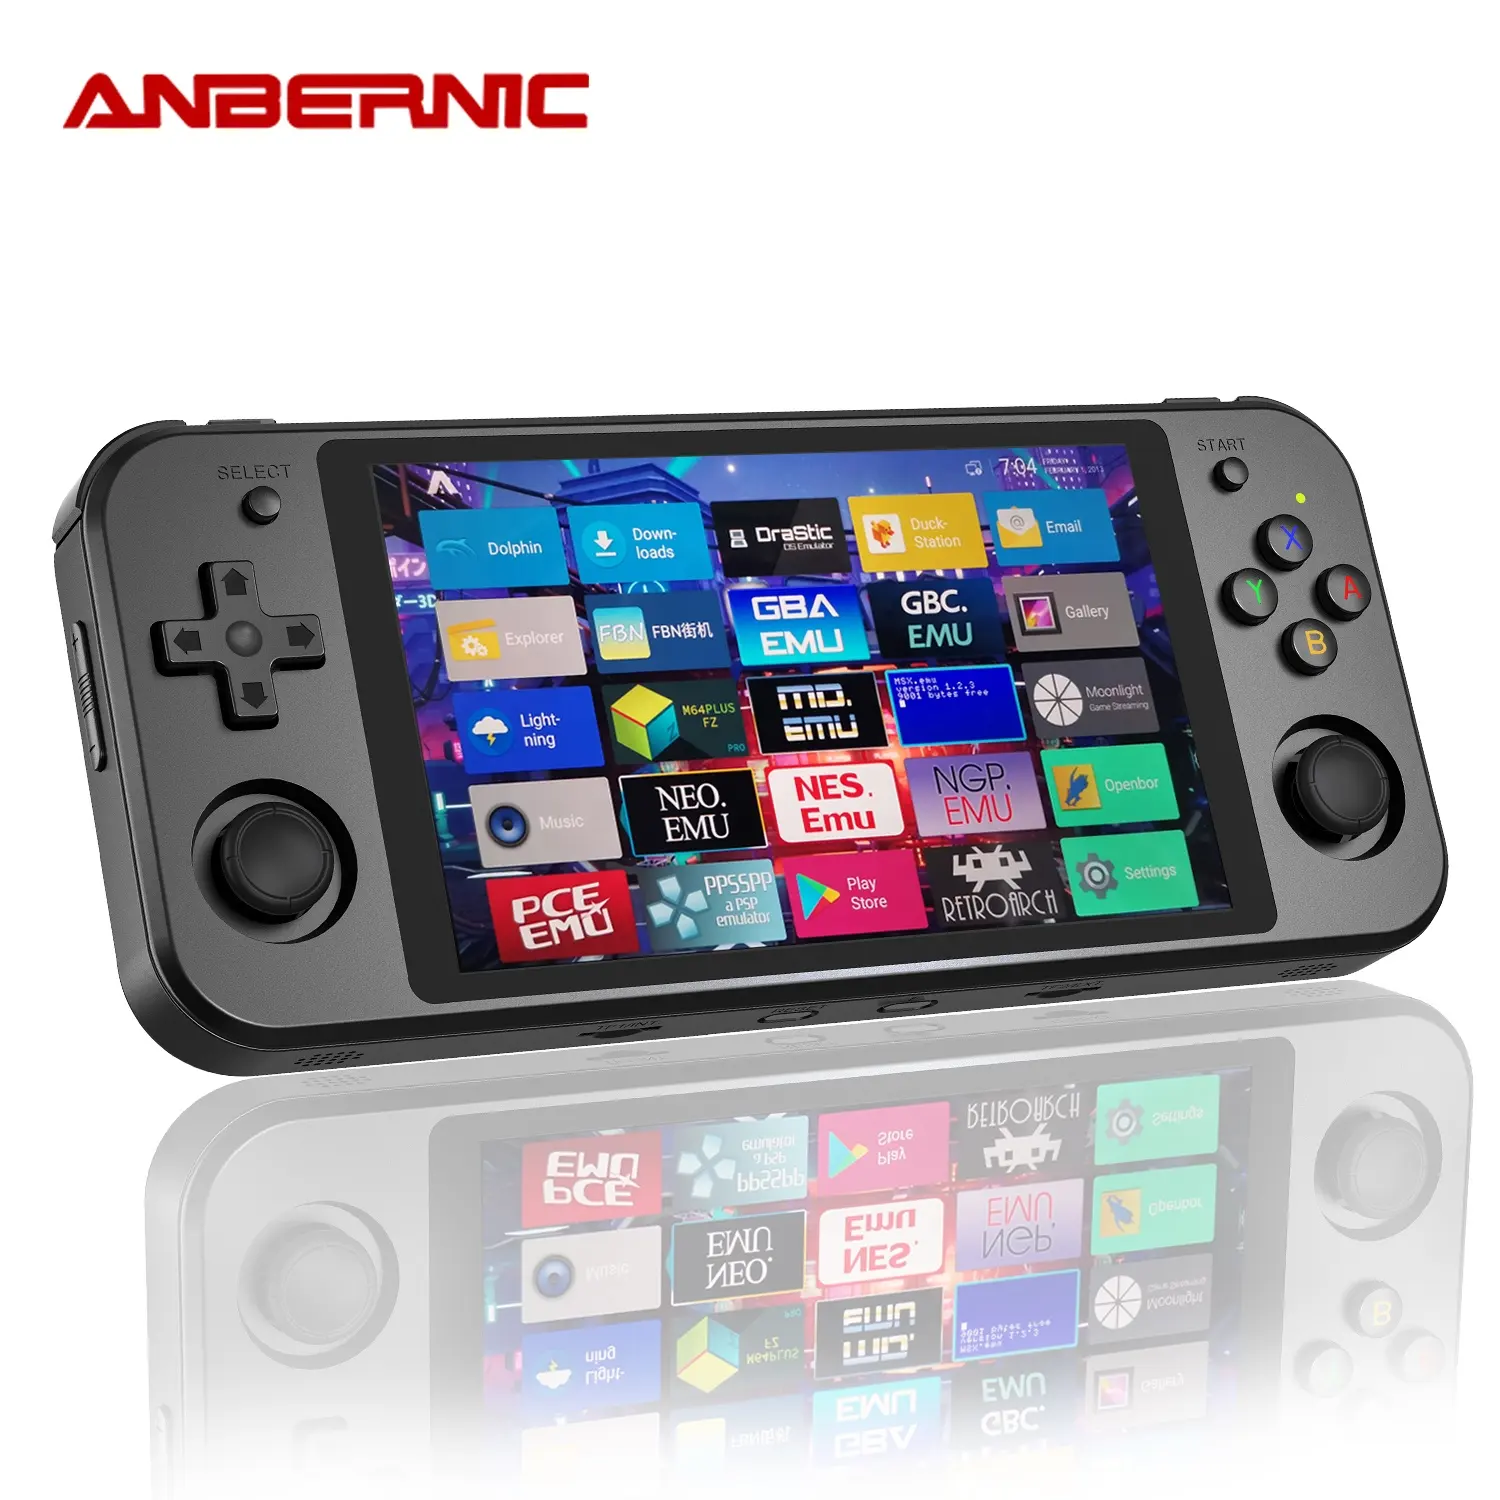 ANBERNIC Handheld-Spiele konsole RK3399 Linux Android Dual System 5,36 Zoll OCA-Bildschirm RG552 Retro Player Beste PC-Spiele